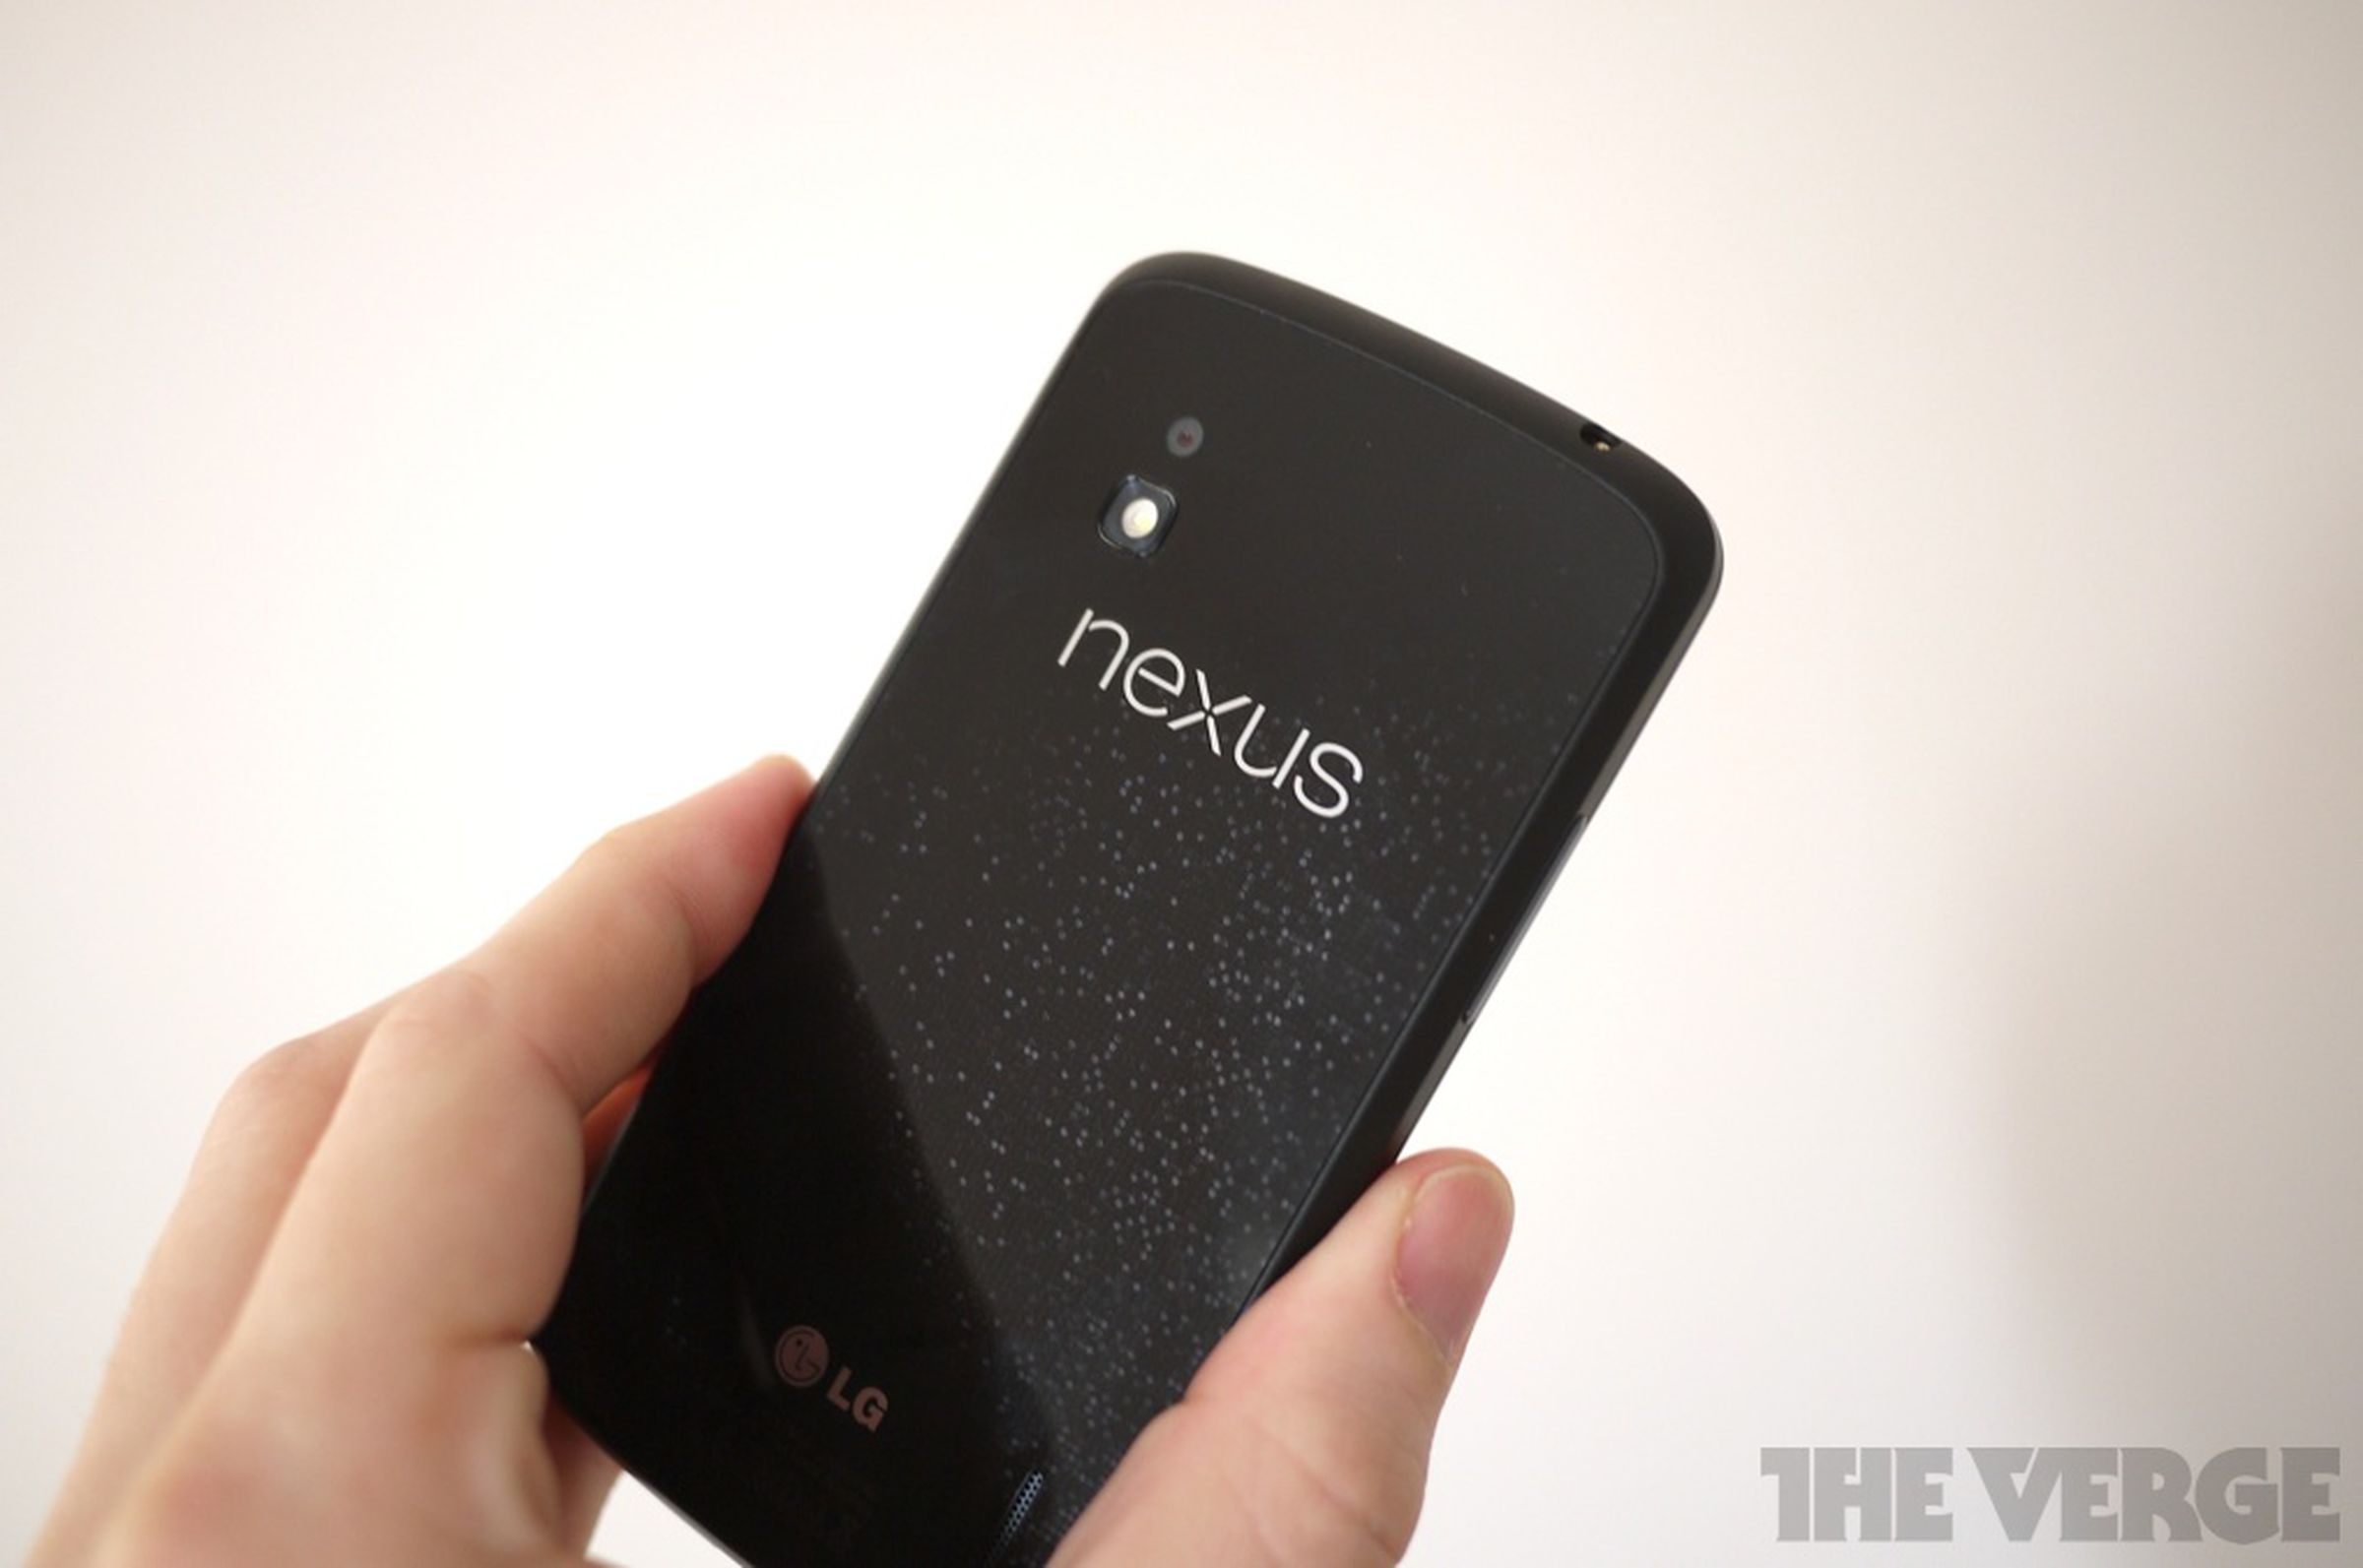 Google Nexus 4 pictures